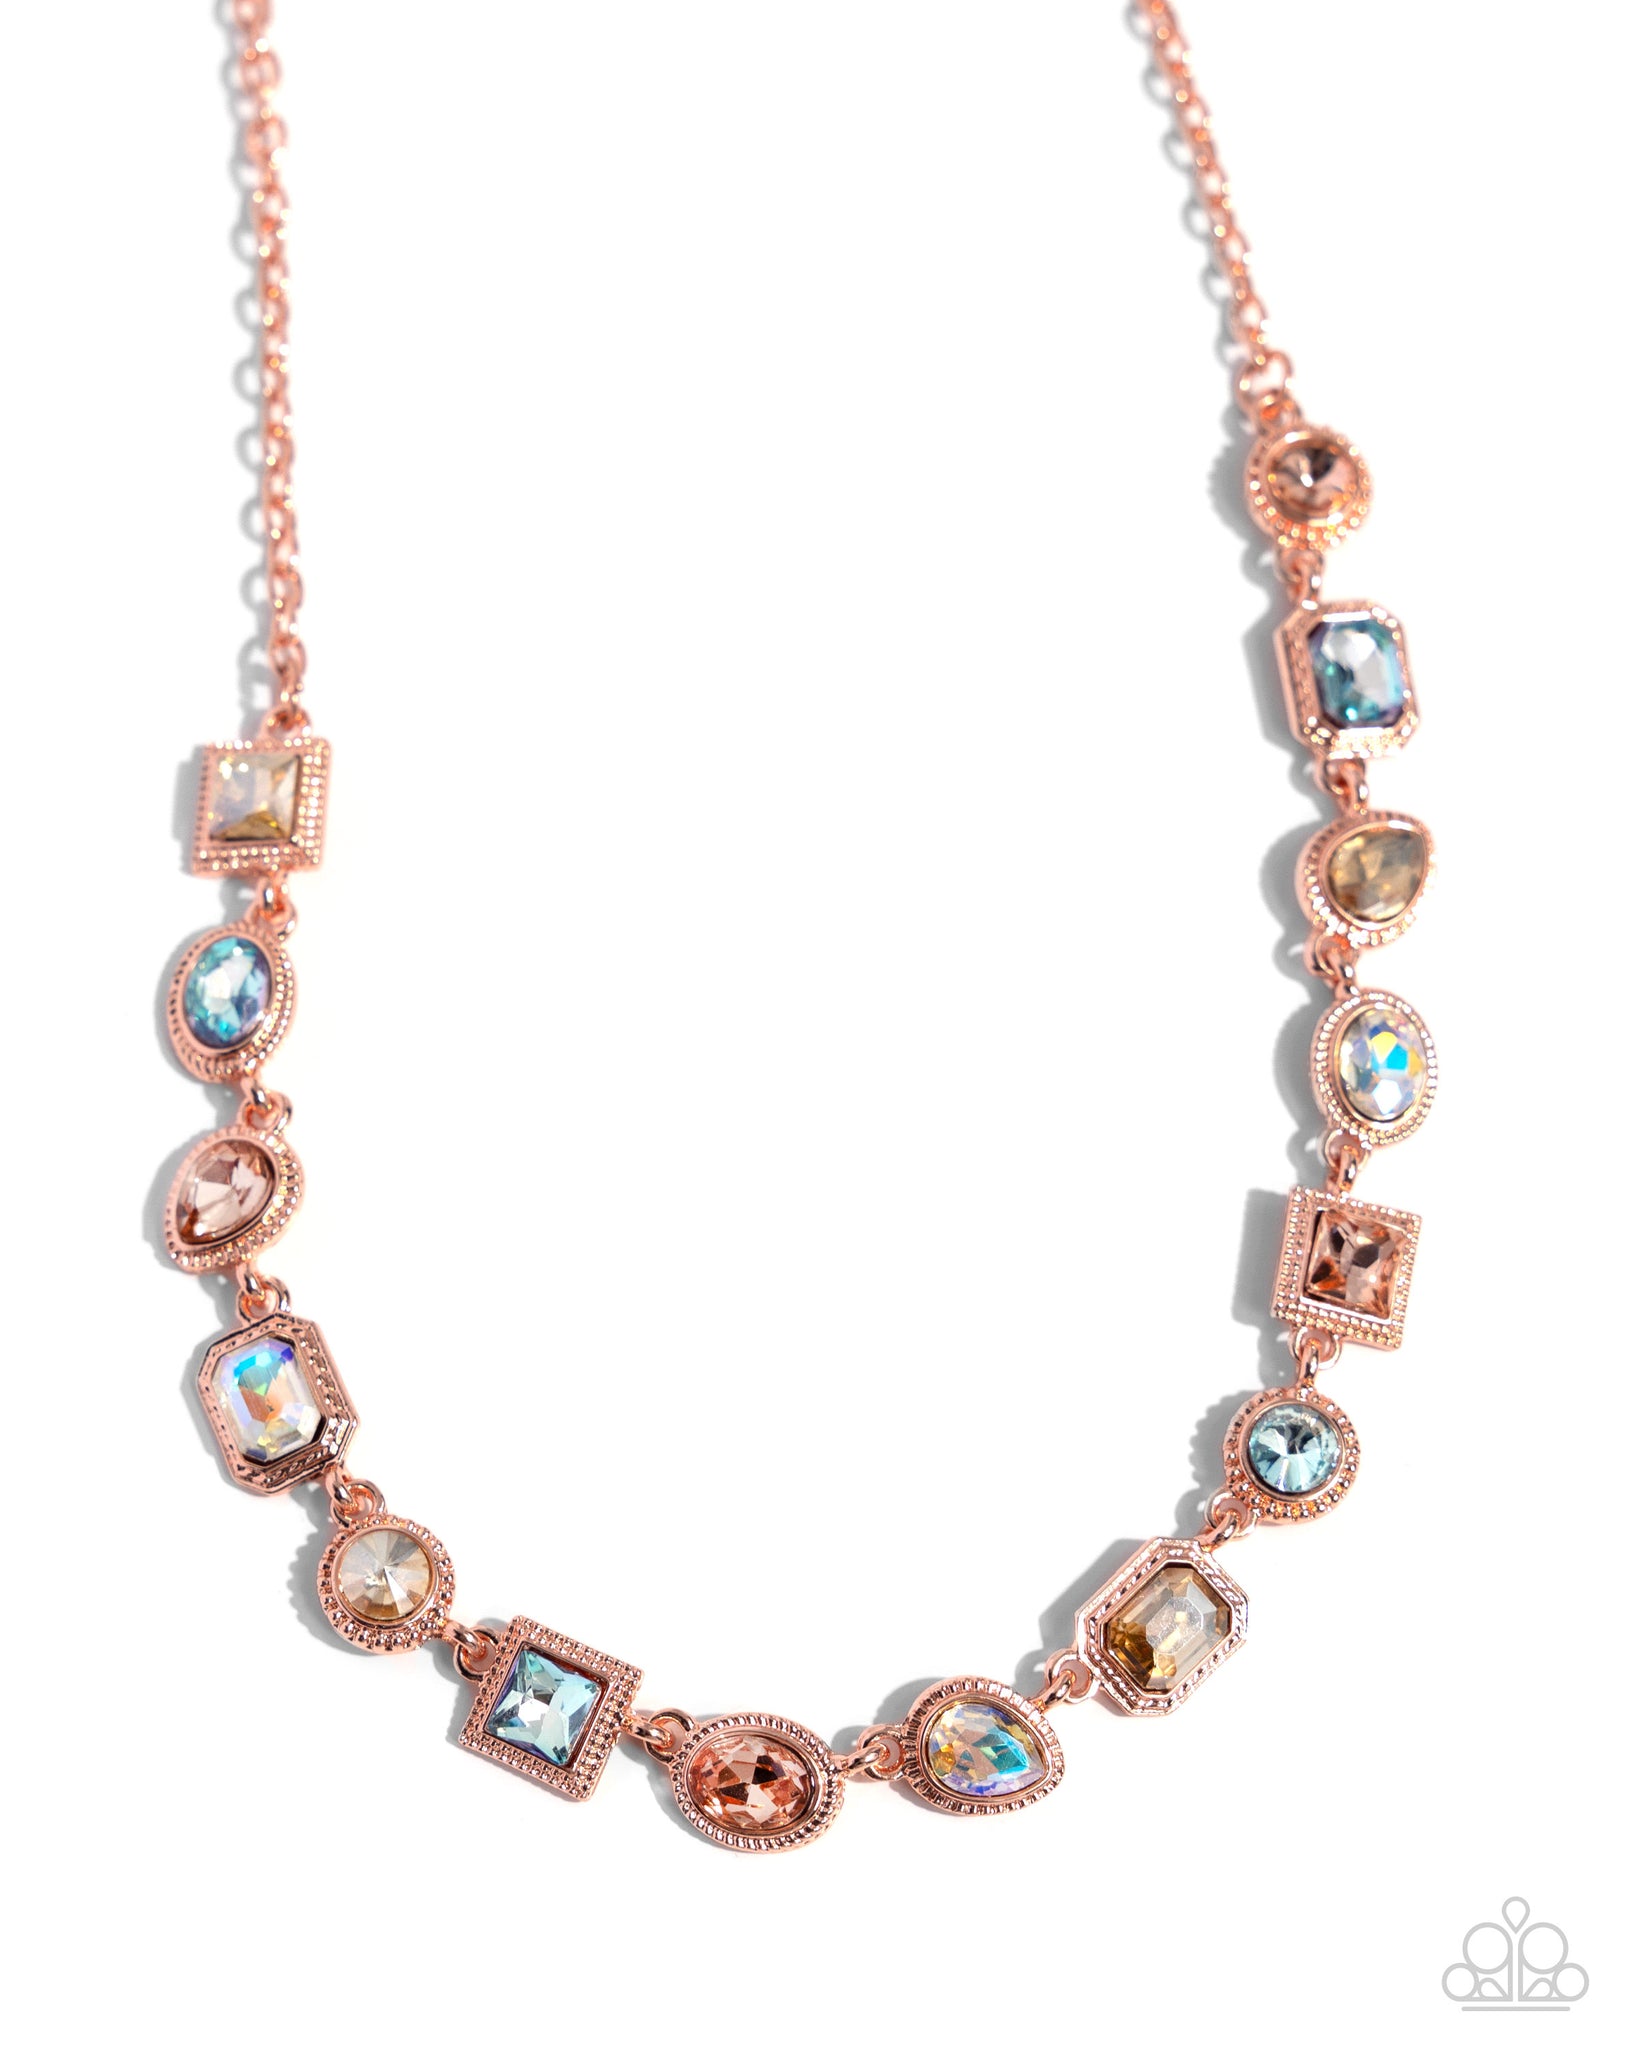 Gallery Glam Necklace (Multi, Copper, Blue)